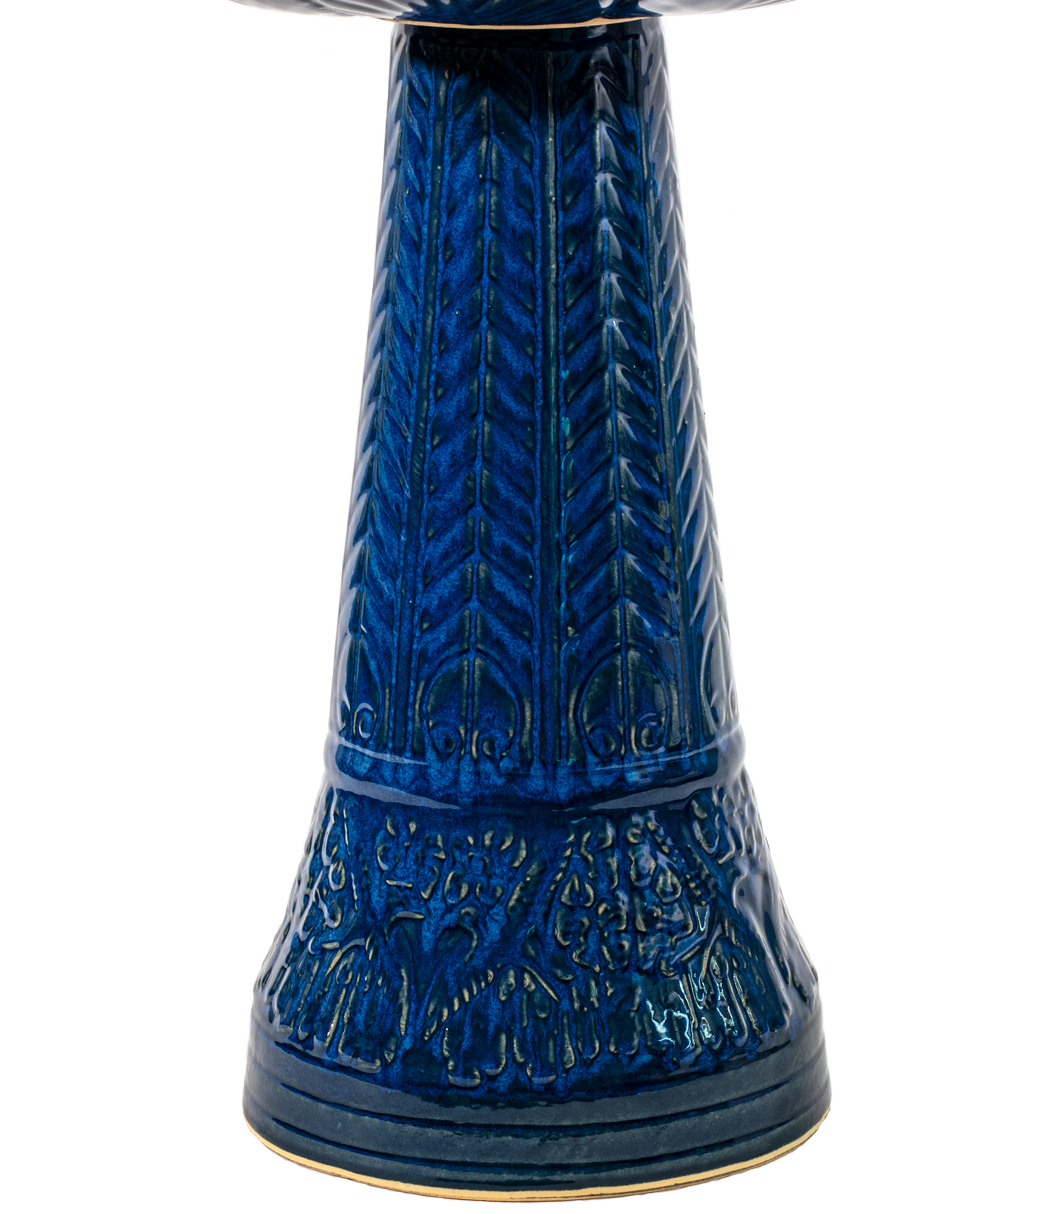 ceramic Blue birdbath pedestal with birds flowers and a chevron design